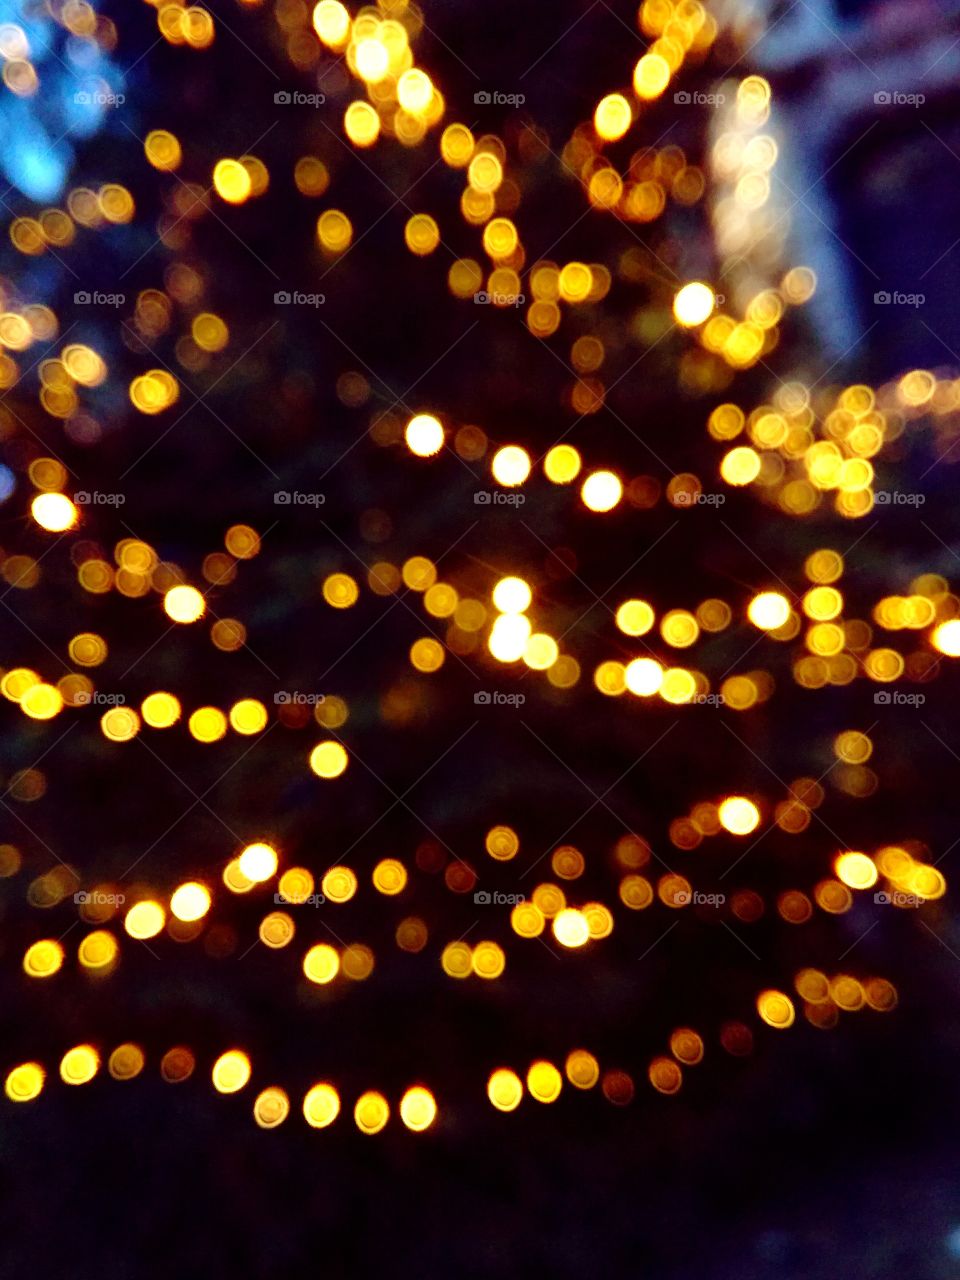 Abstract light of Christmas tree